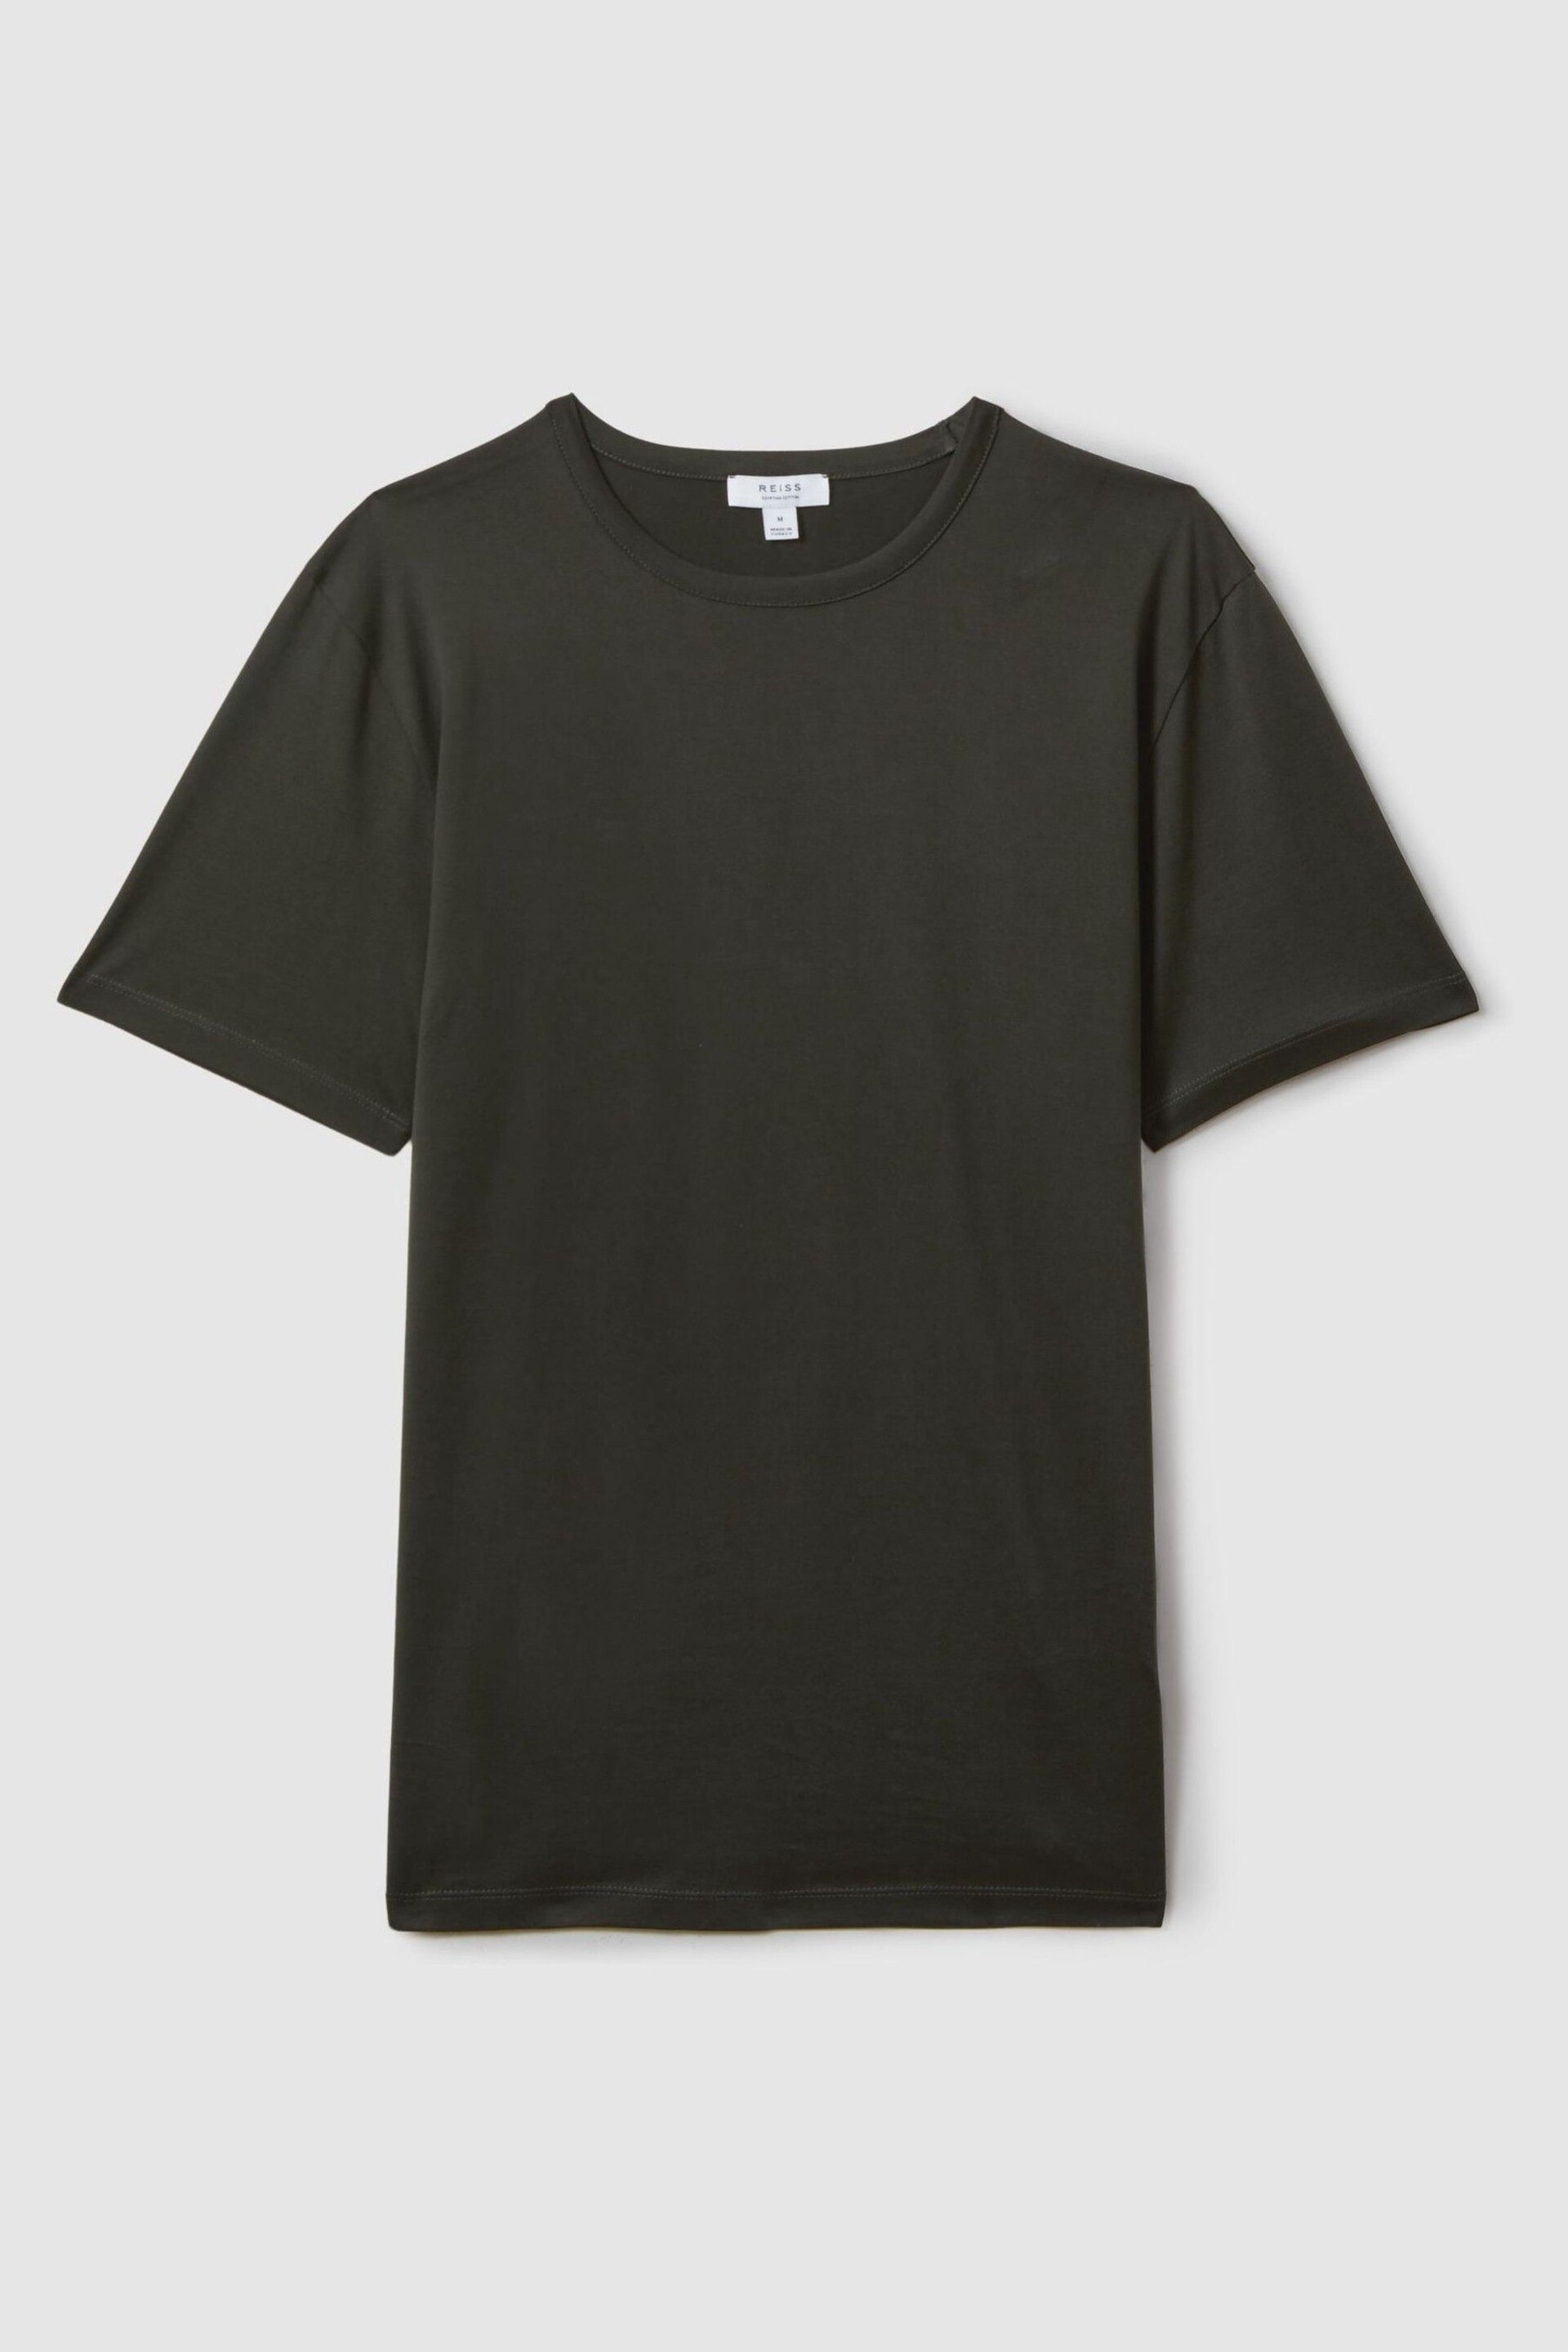 Reiss Dark Olive Green Caspian Mercerised Cotton Crew Neck T-Shirt - Image 2 of 5